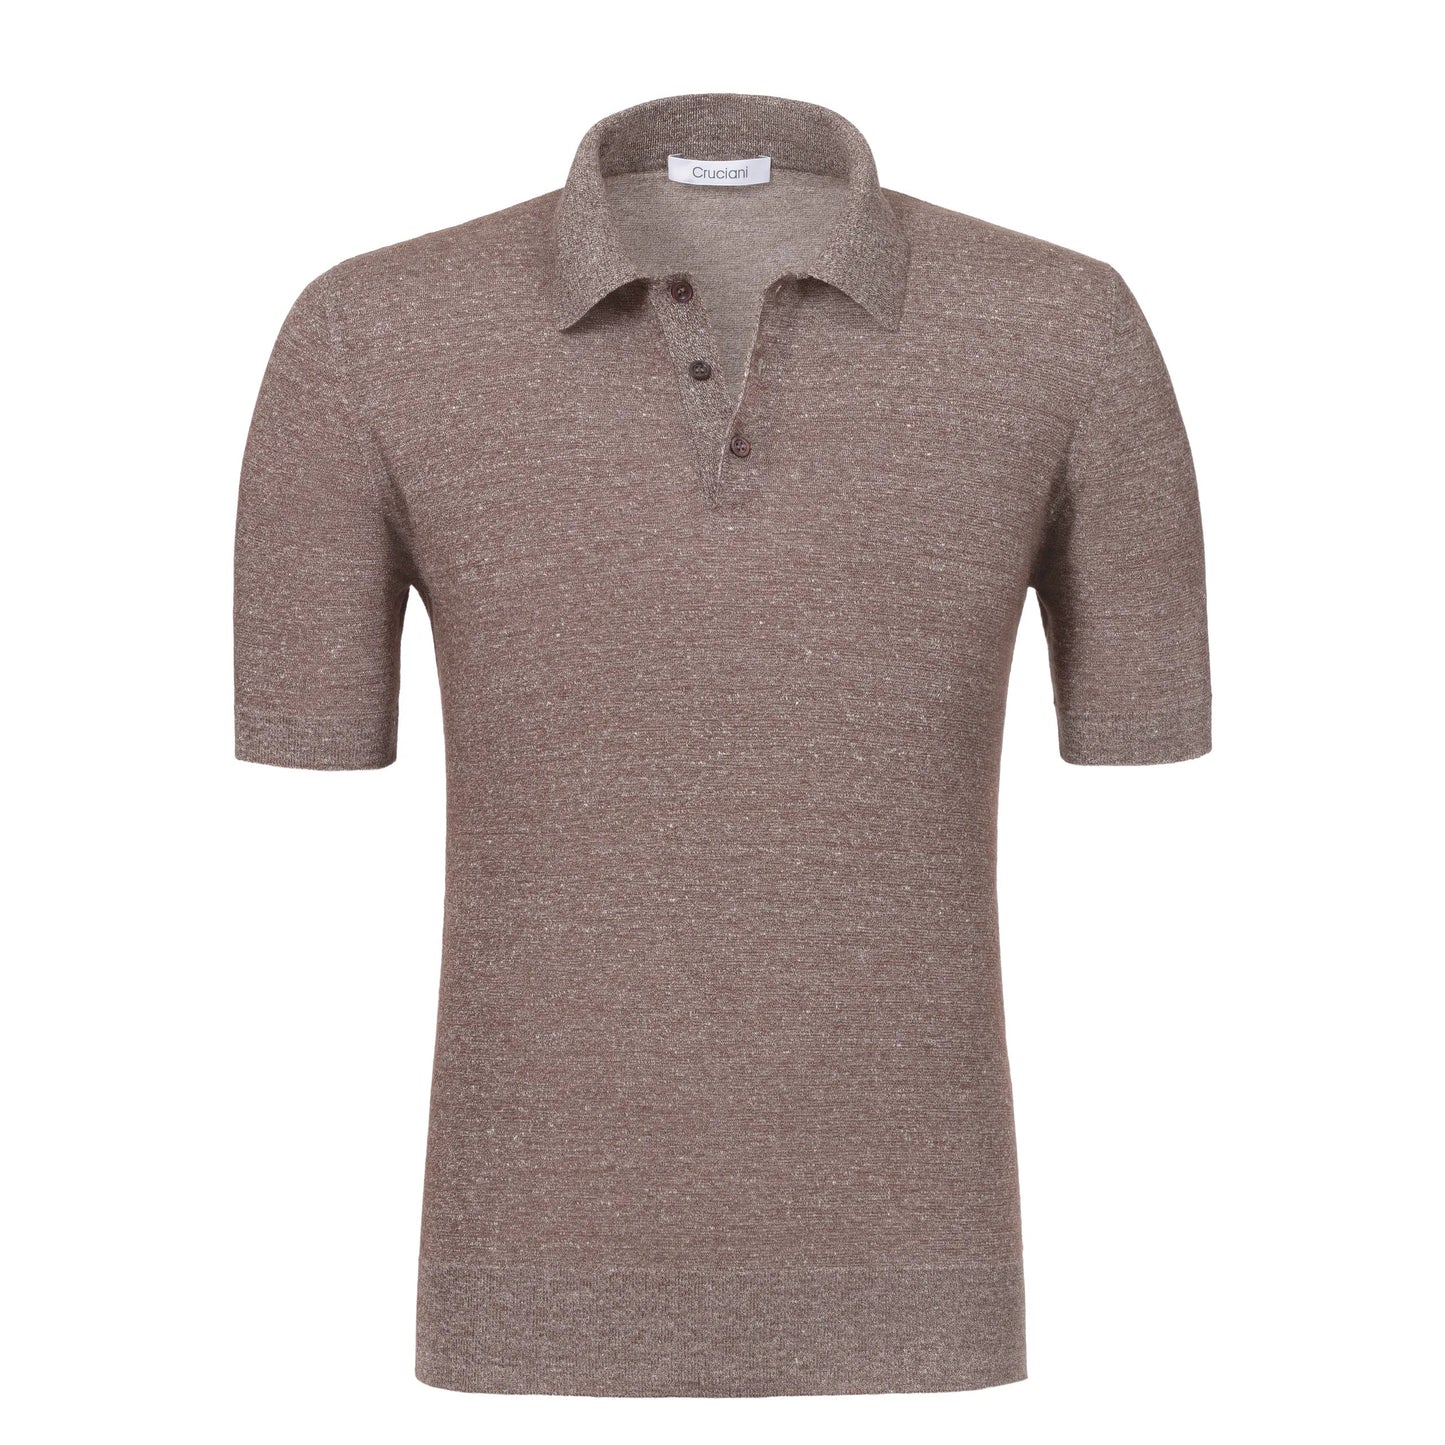 Cruciani Linen-Blend Sweater Polo in Brown Melange - SARTALE